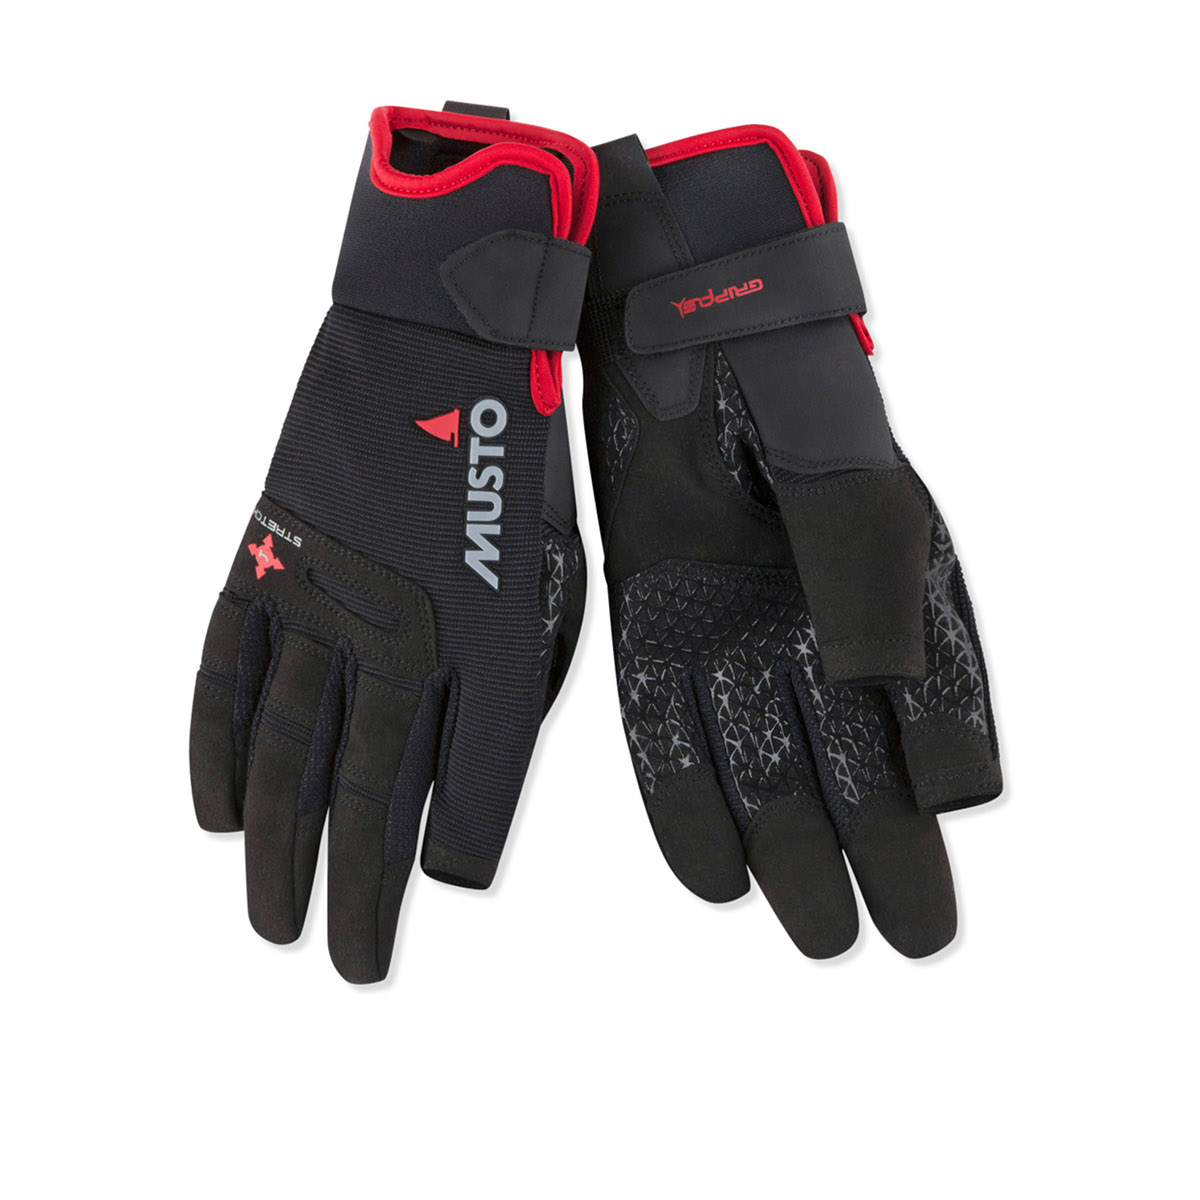 Musto Performance gants de voile longs doigts noirs, taille XXL